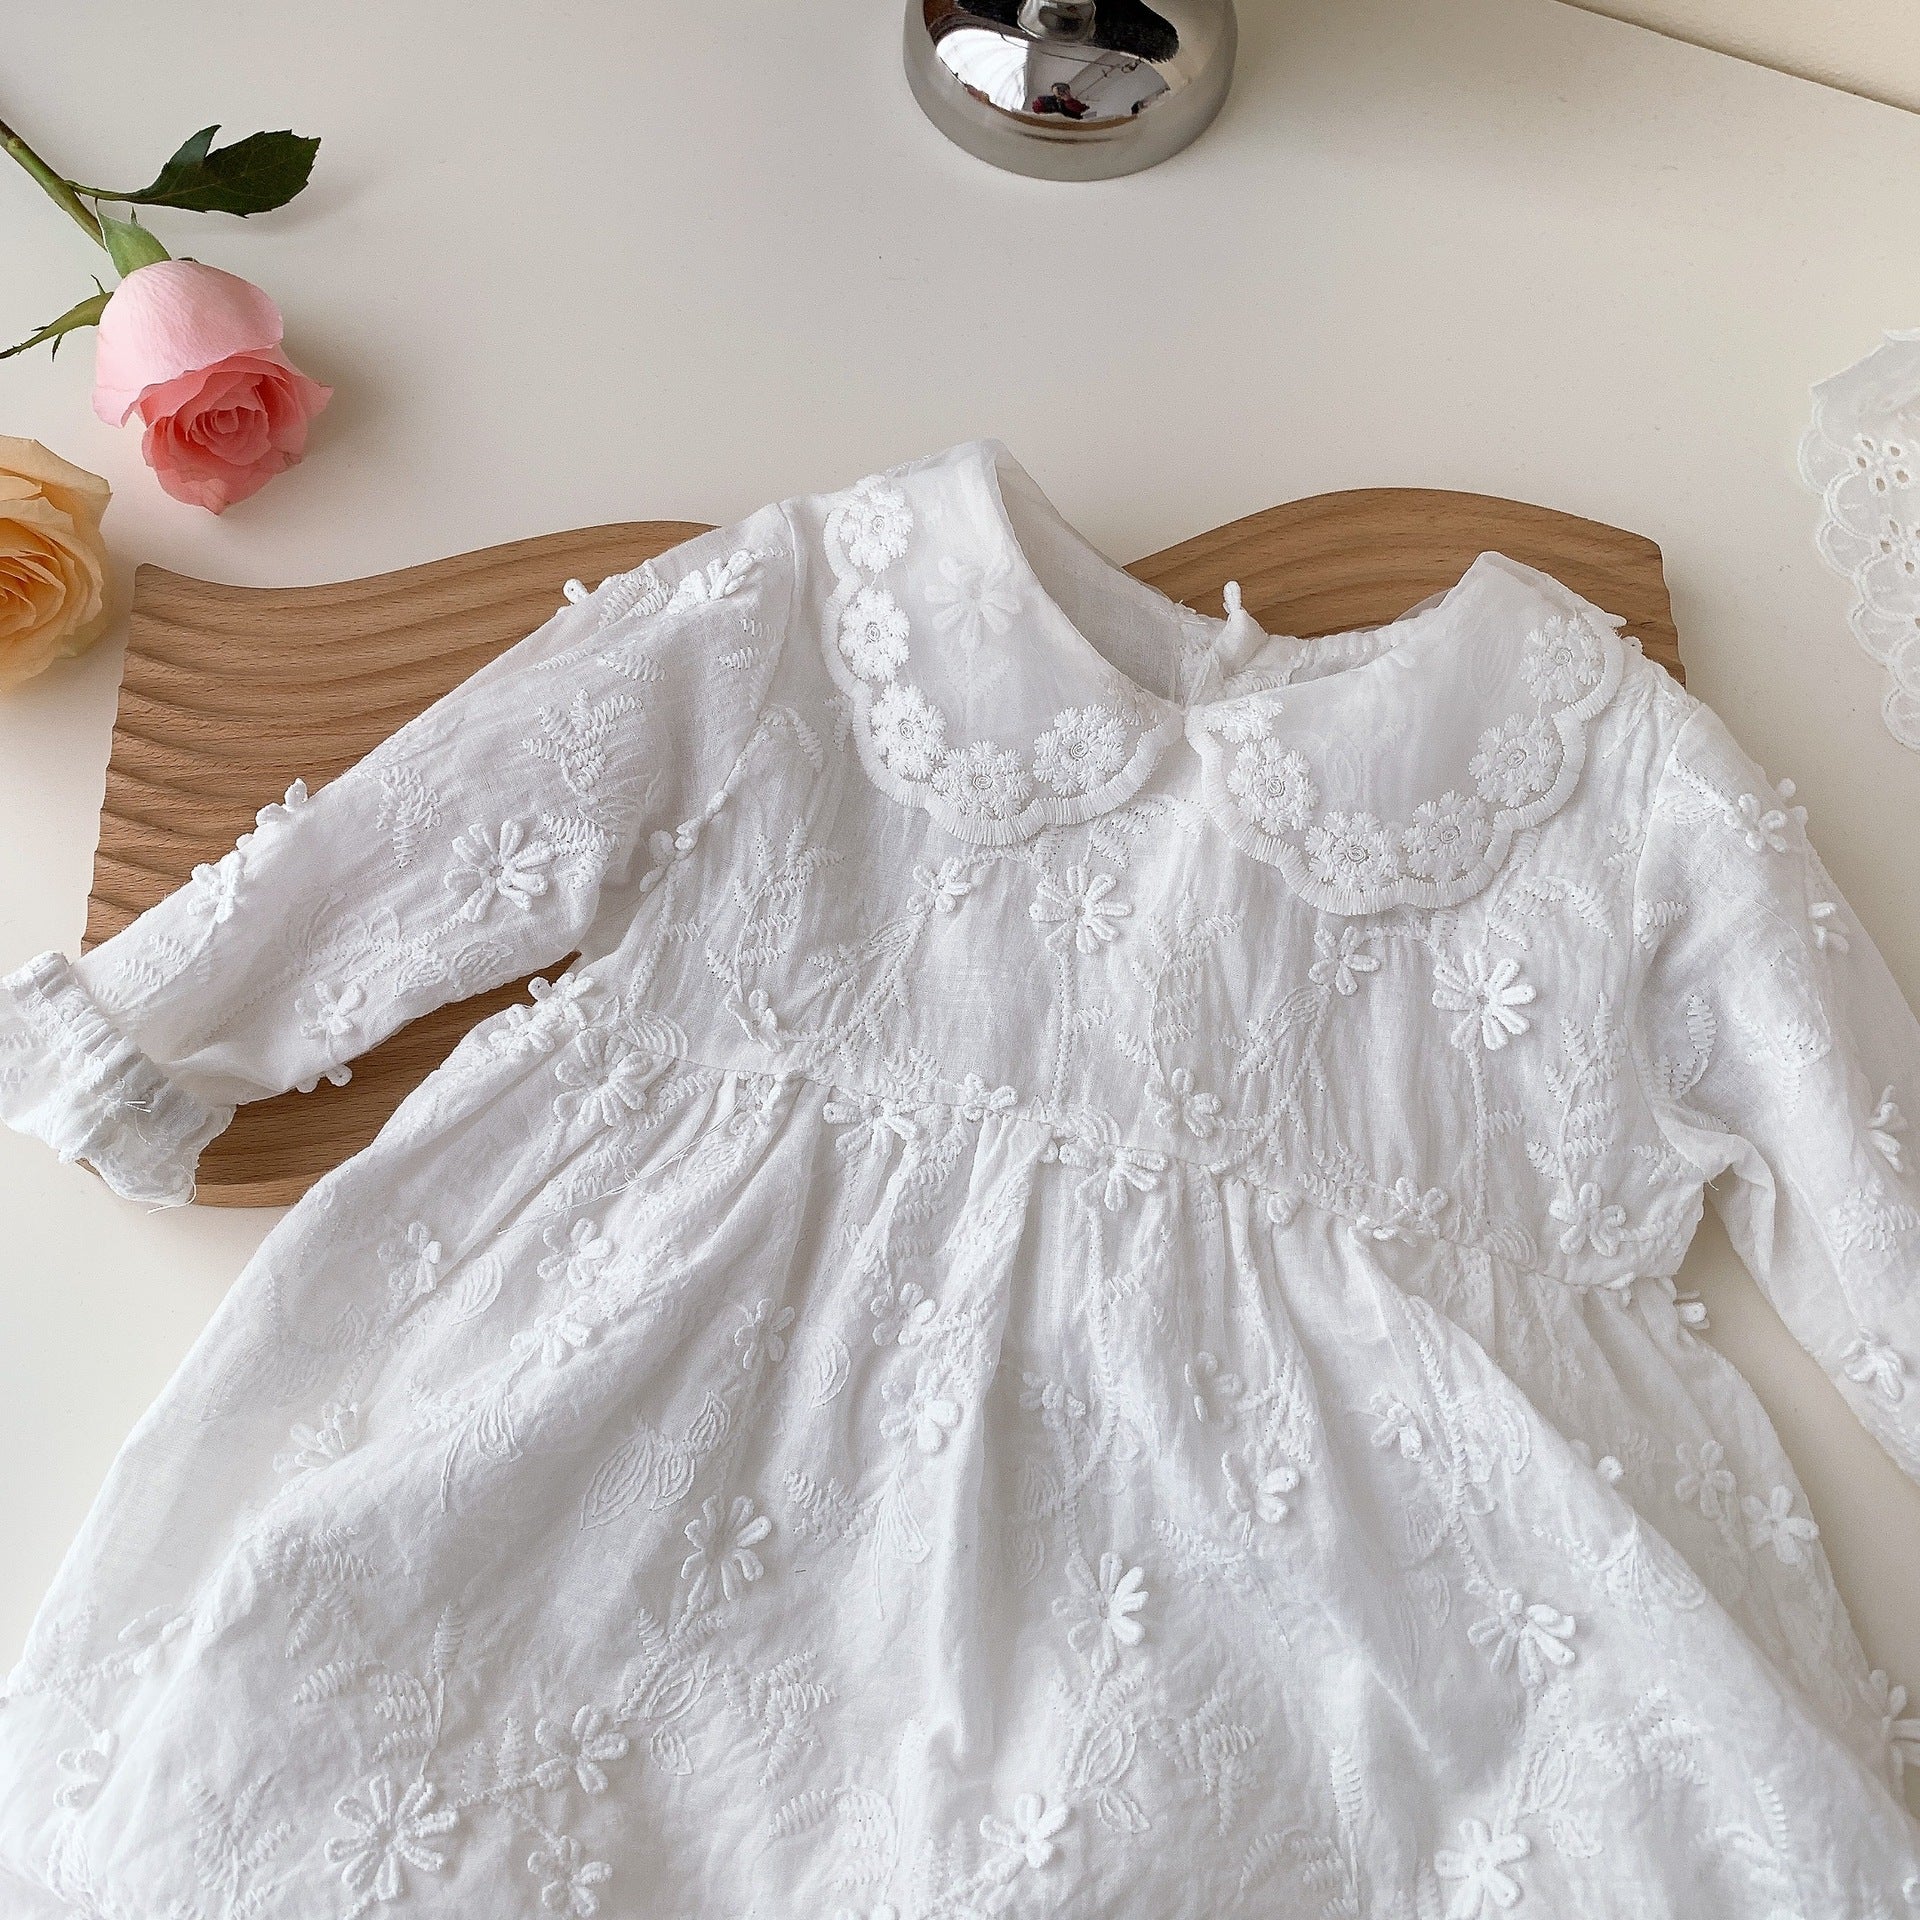 Flower lace white dress [N3031] 